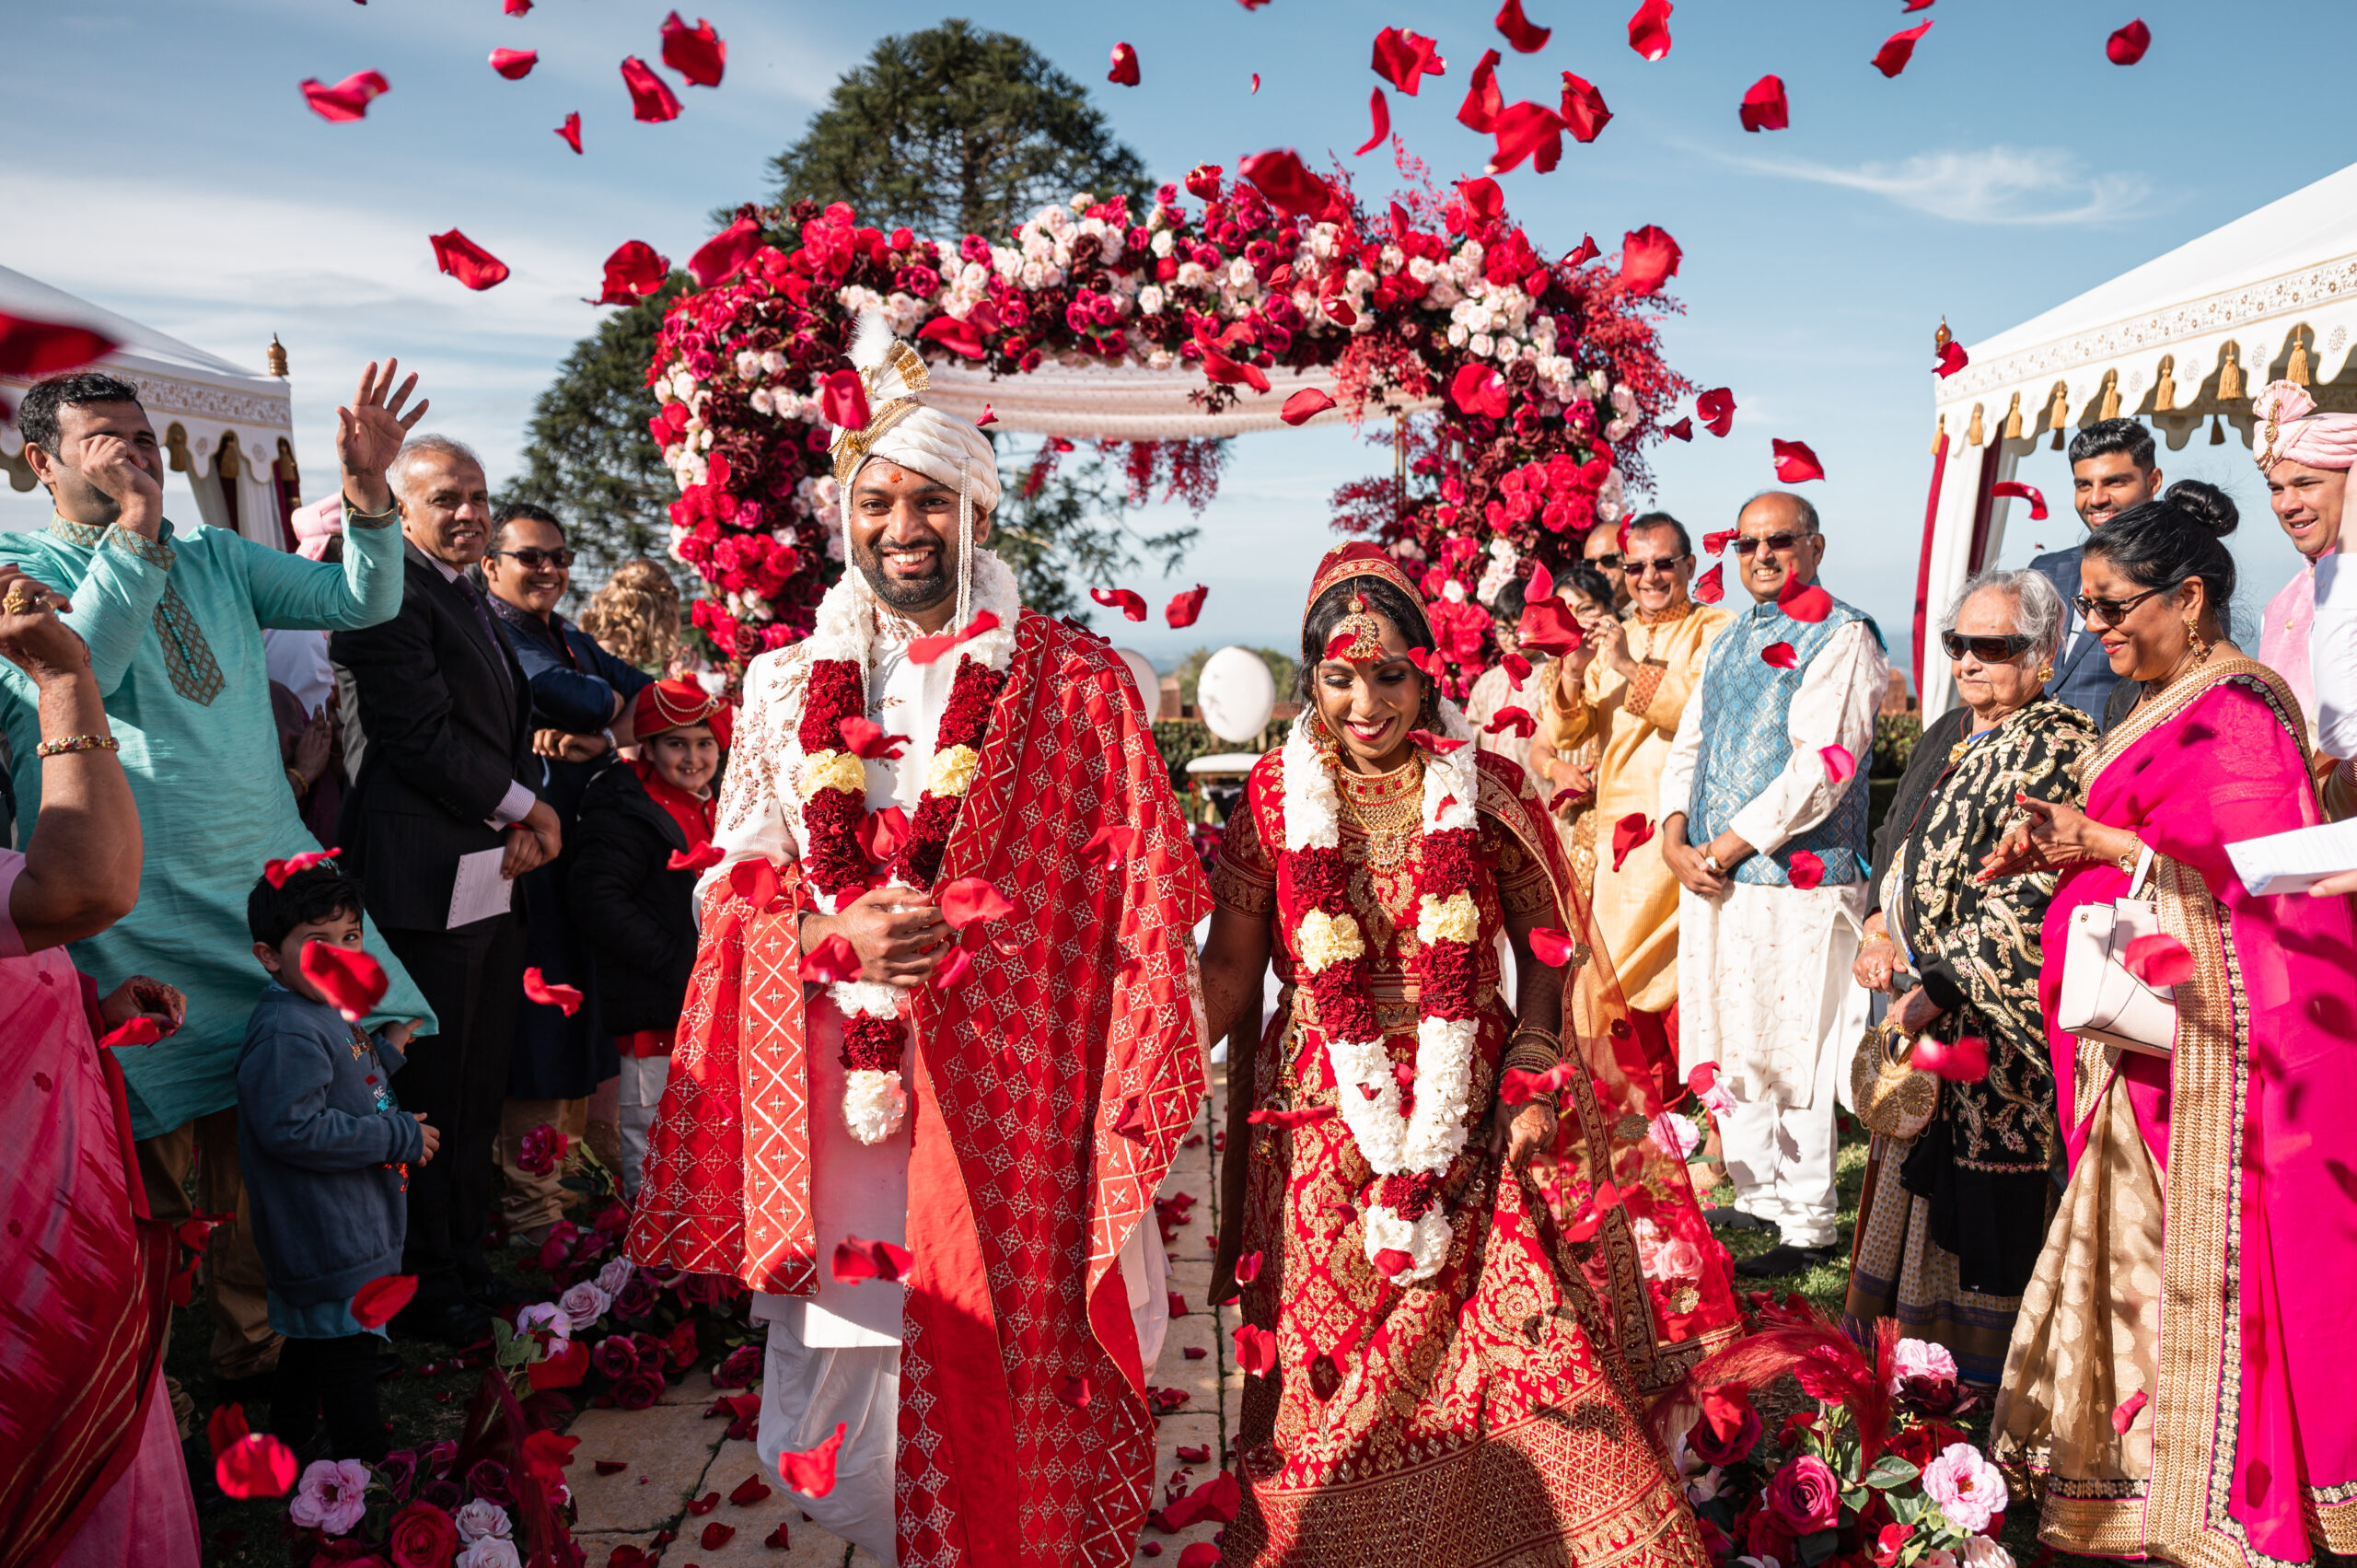 Flaxton Gardens Sunshine Coast Hinterland Maleny Indian Wedding